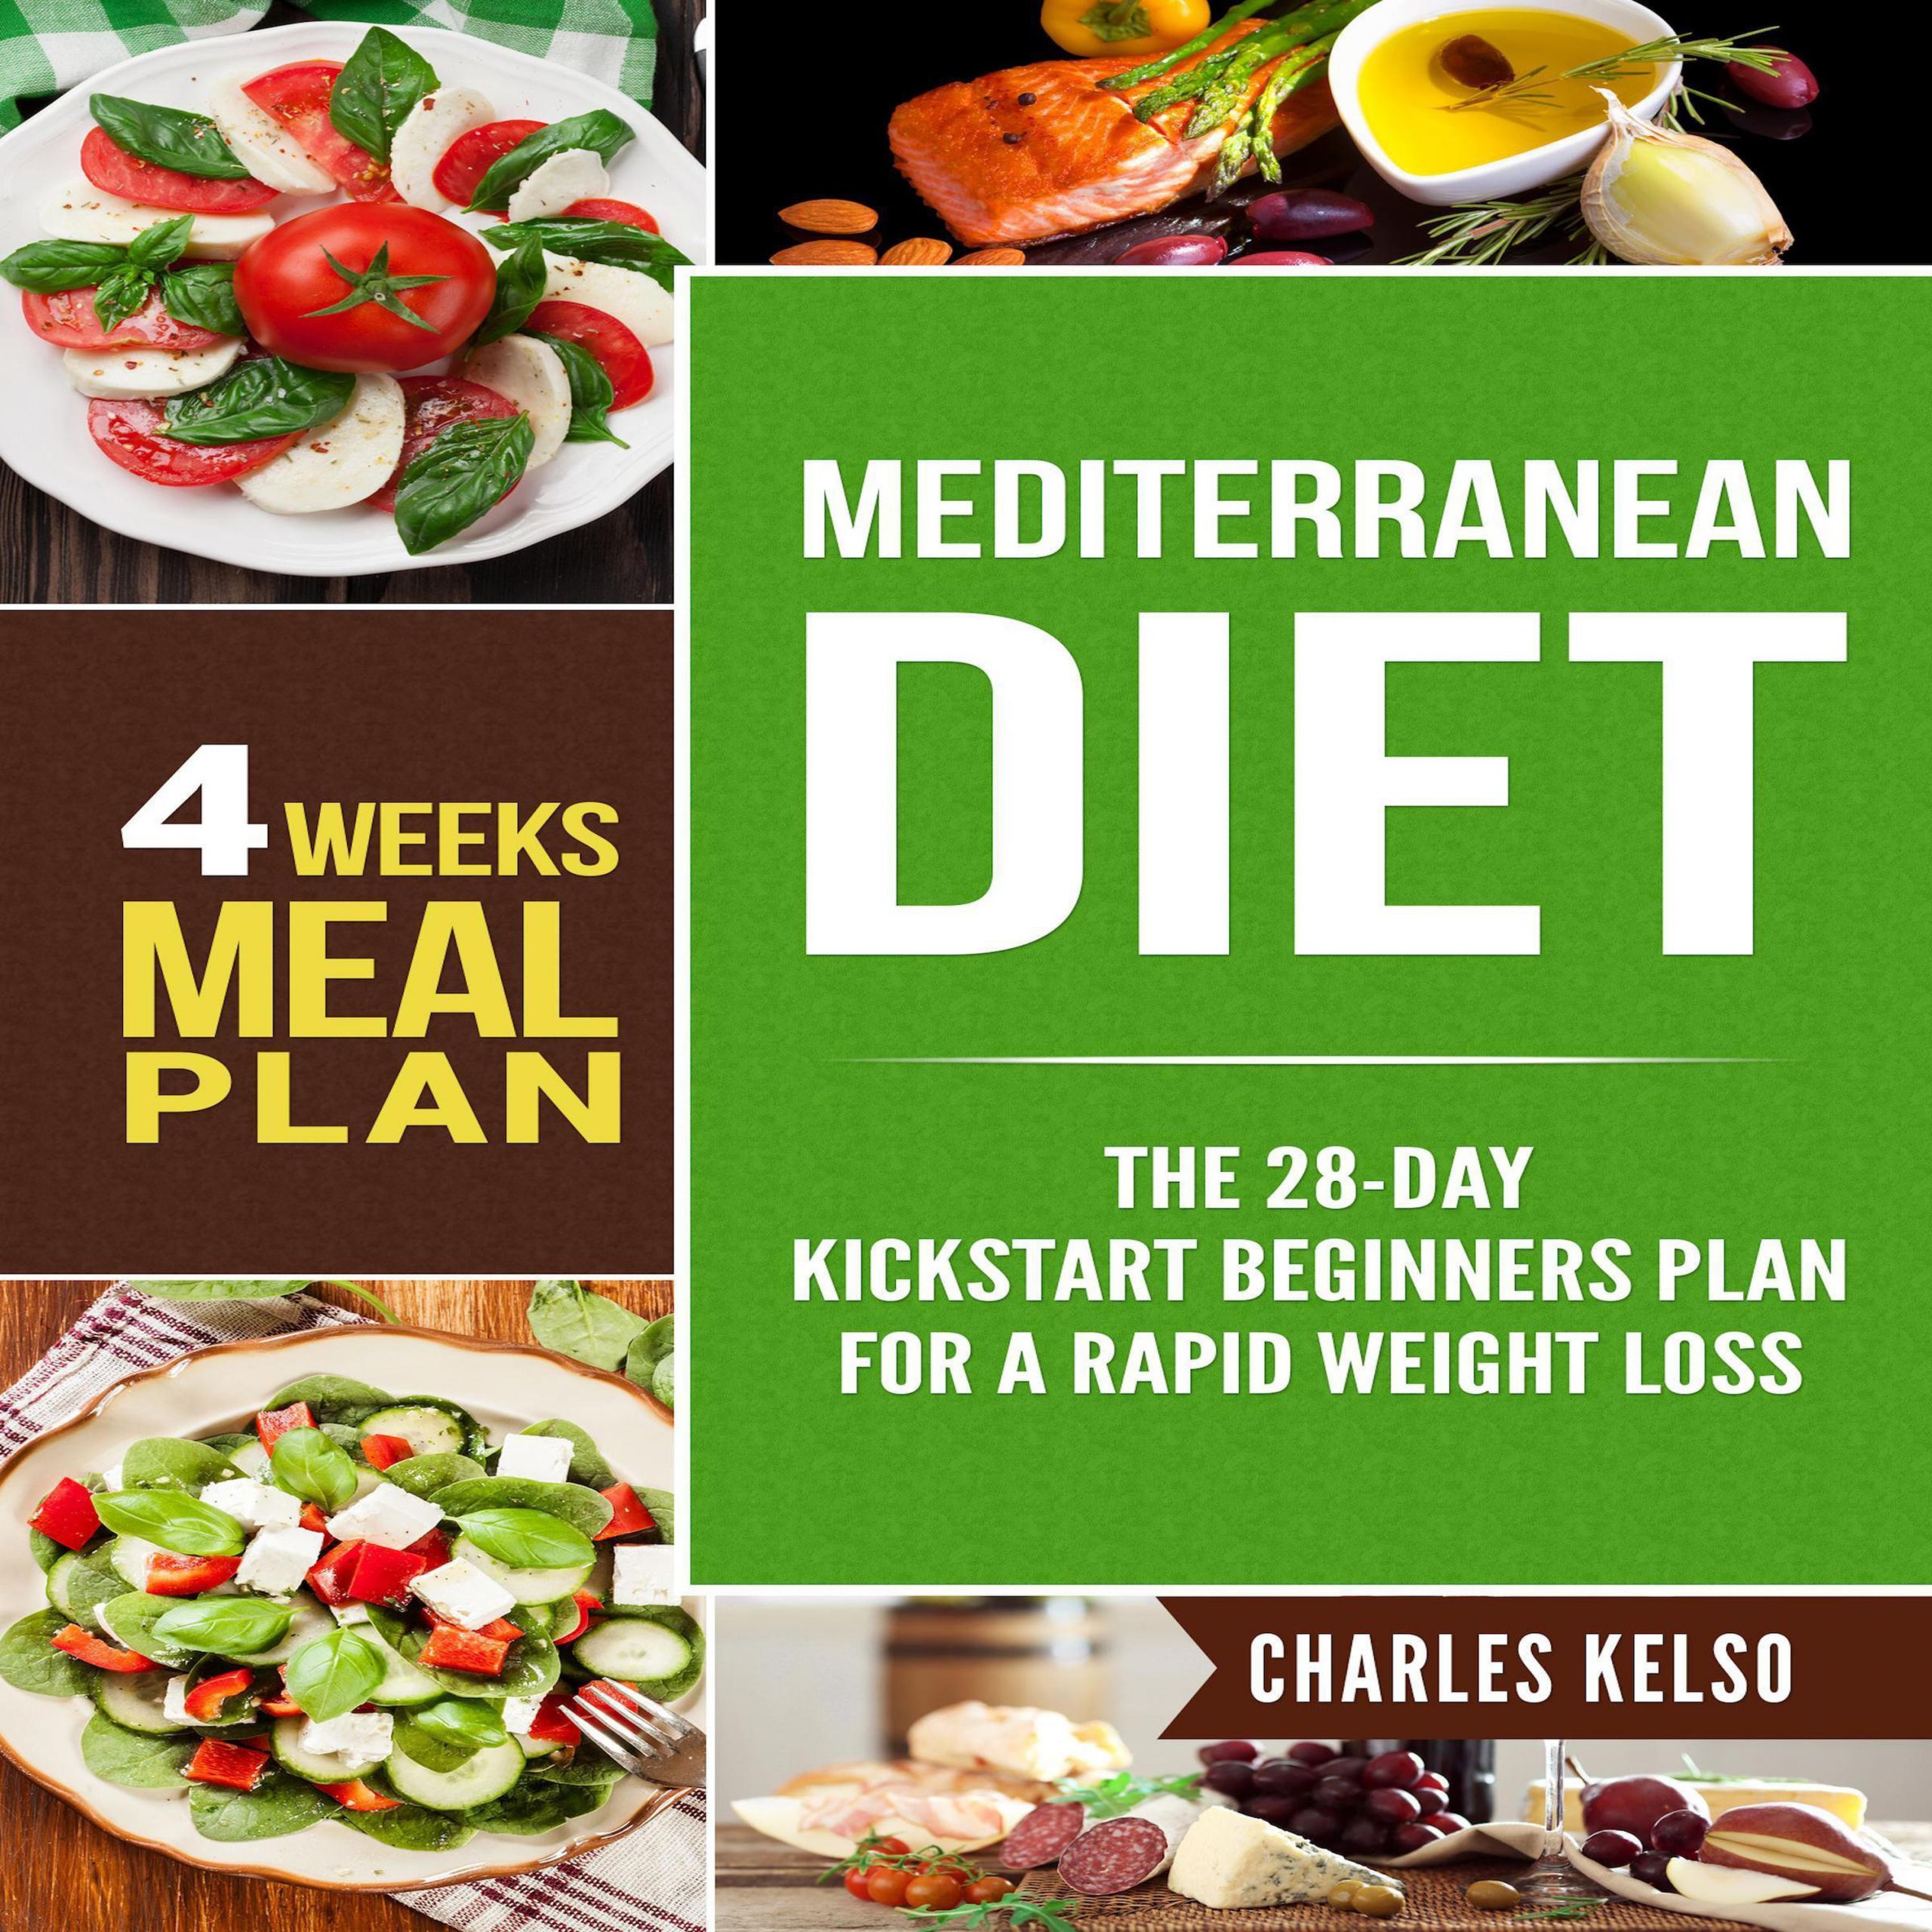 15 Recipes for Great 28 Day Mediterranean Diet Plan